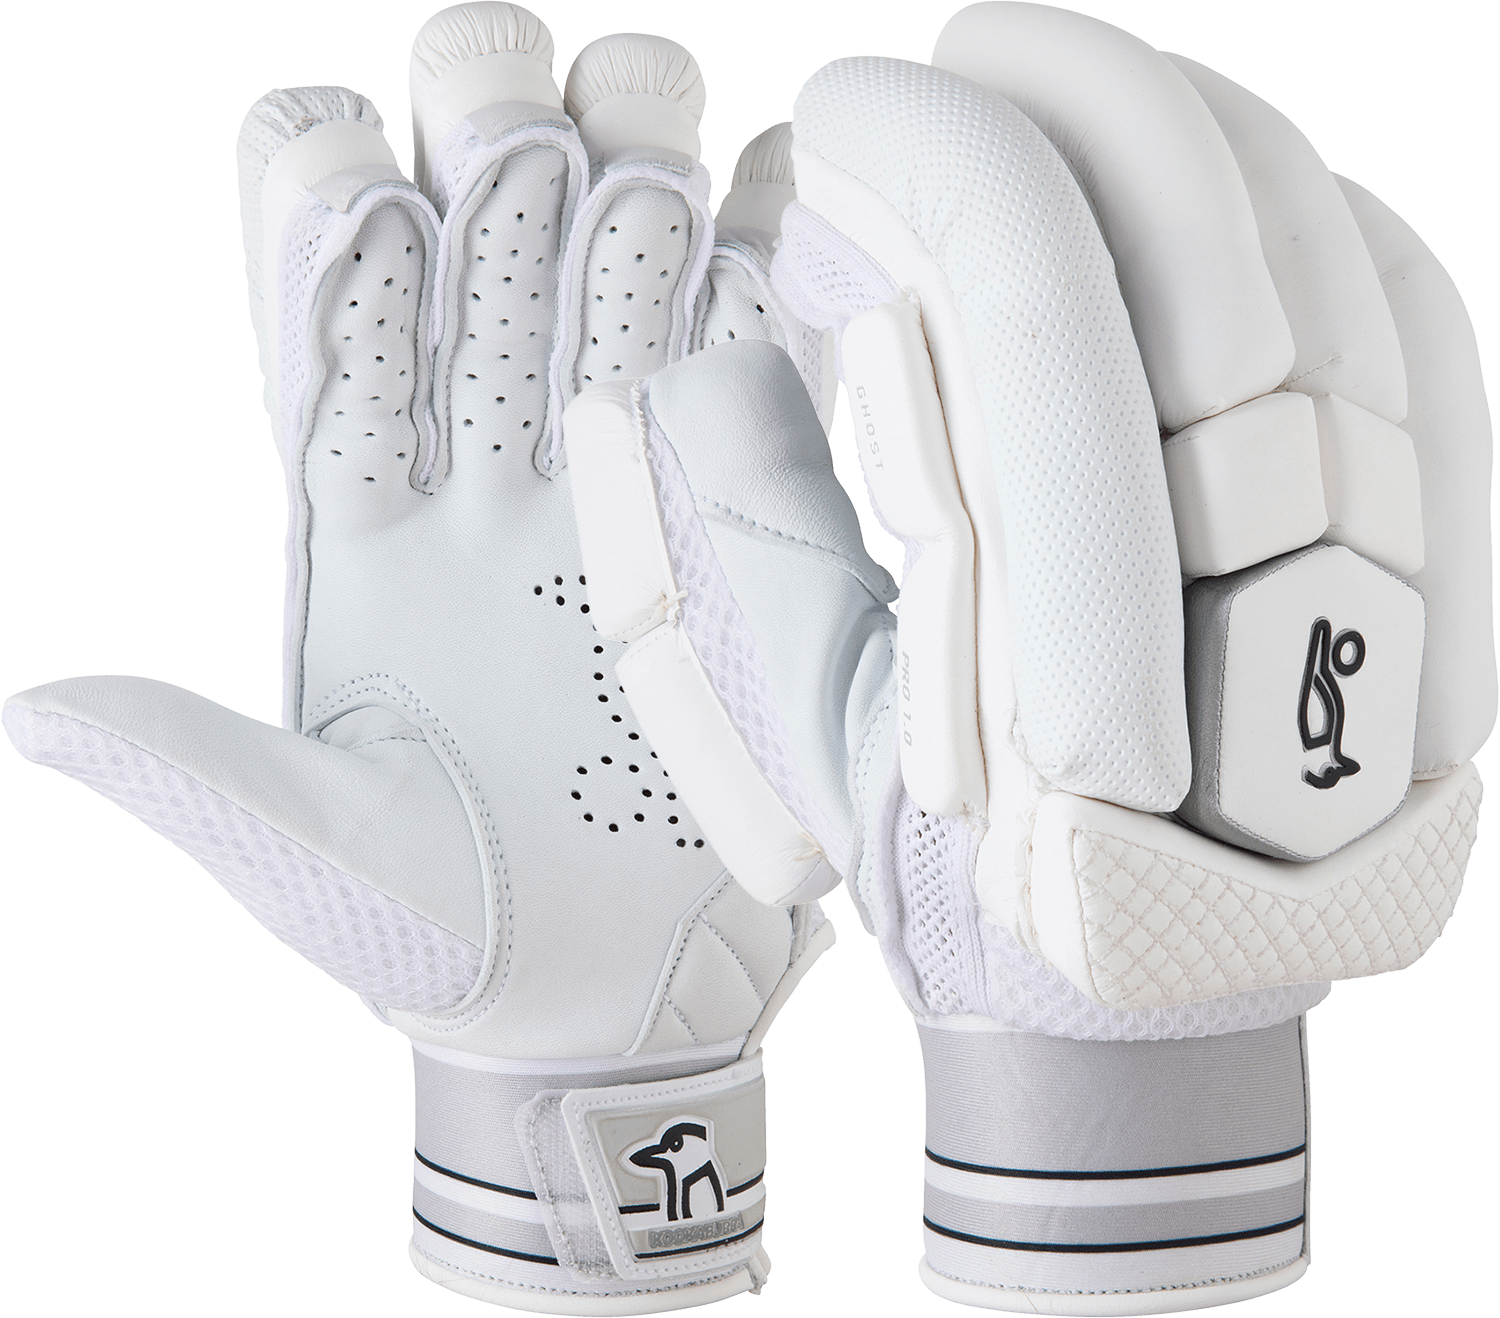 Kookaburra Gloves Kookaburra Ghost Pro 1.0 Cricket Batting Gloves